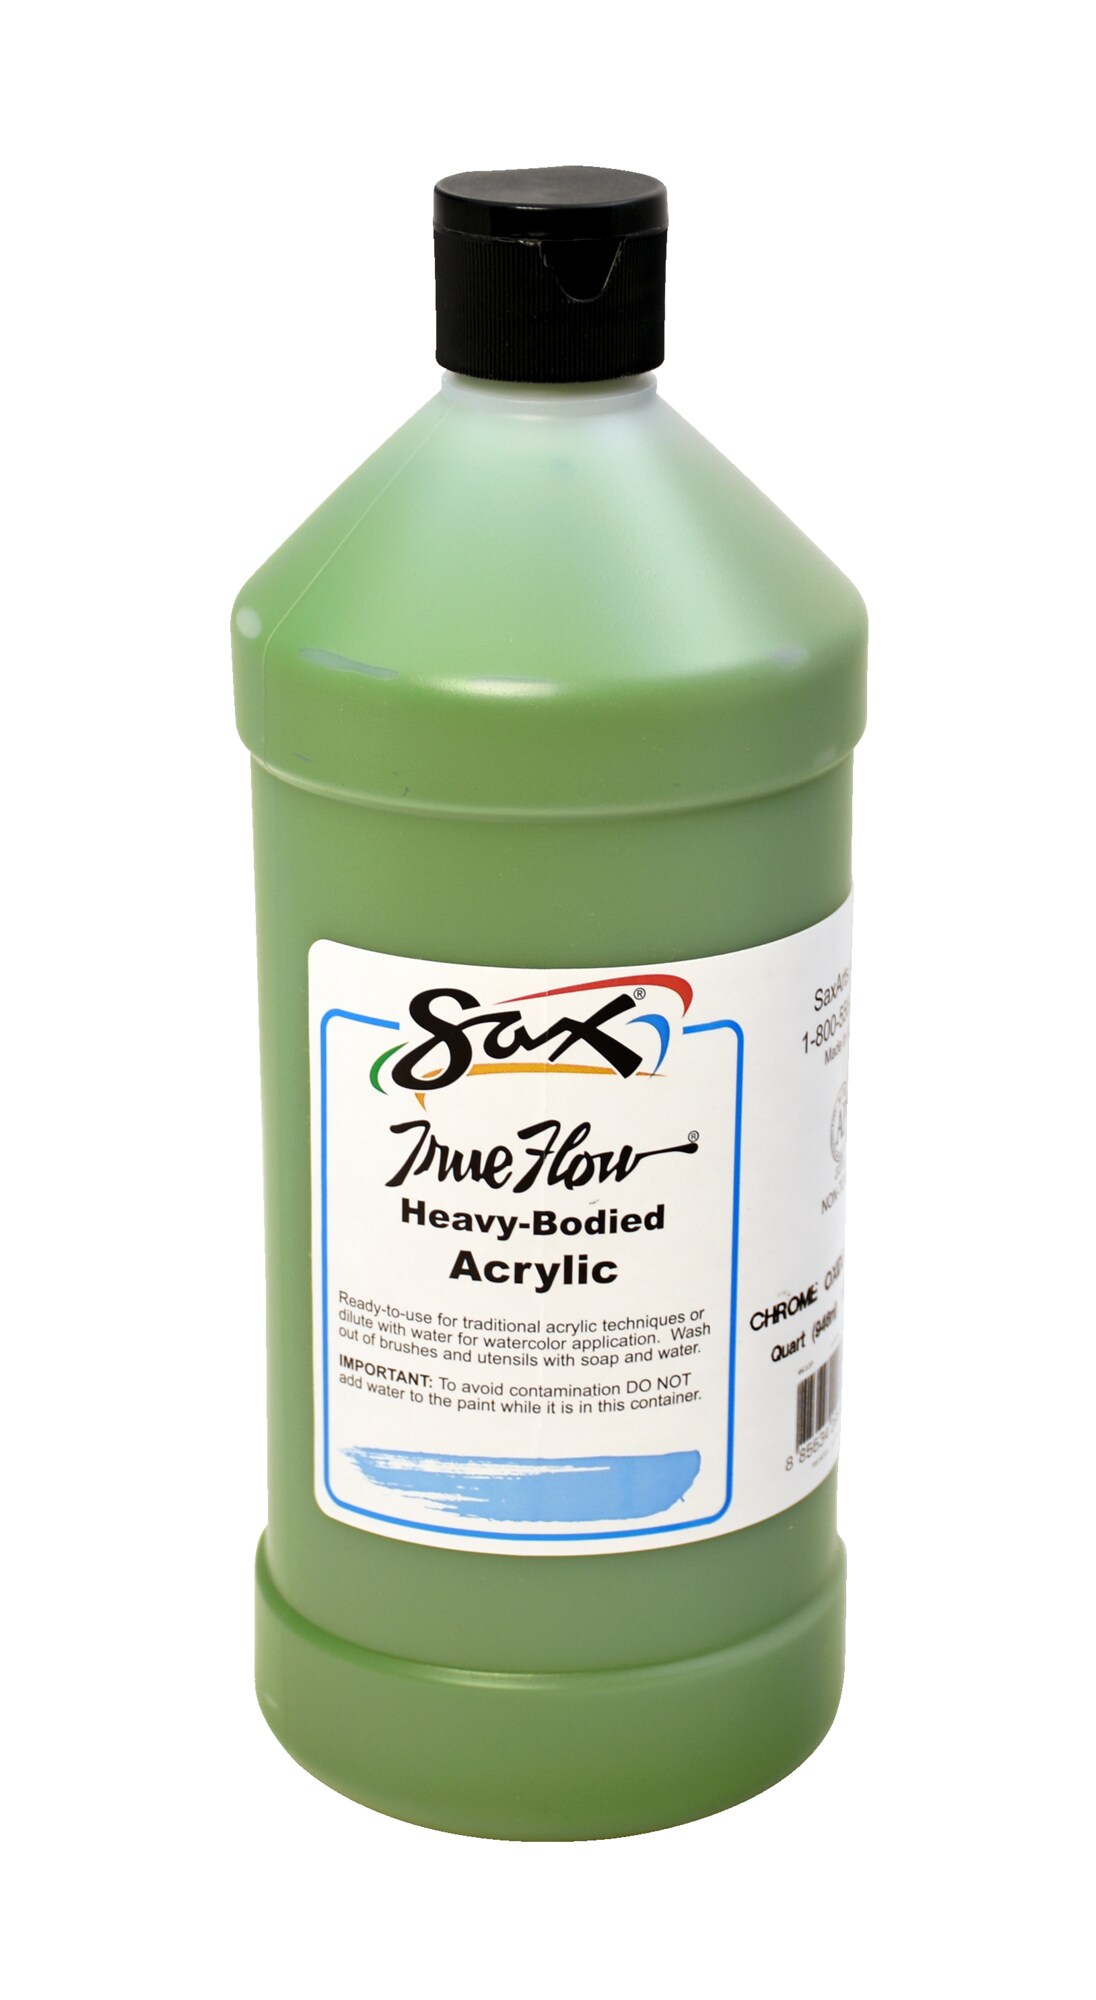 Sax True Flow Acrylic Mural Paint, 1 Quart Plastic Container, Green